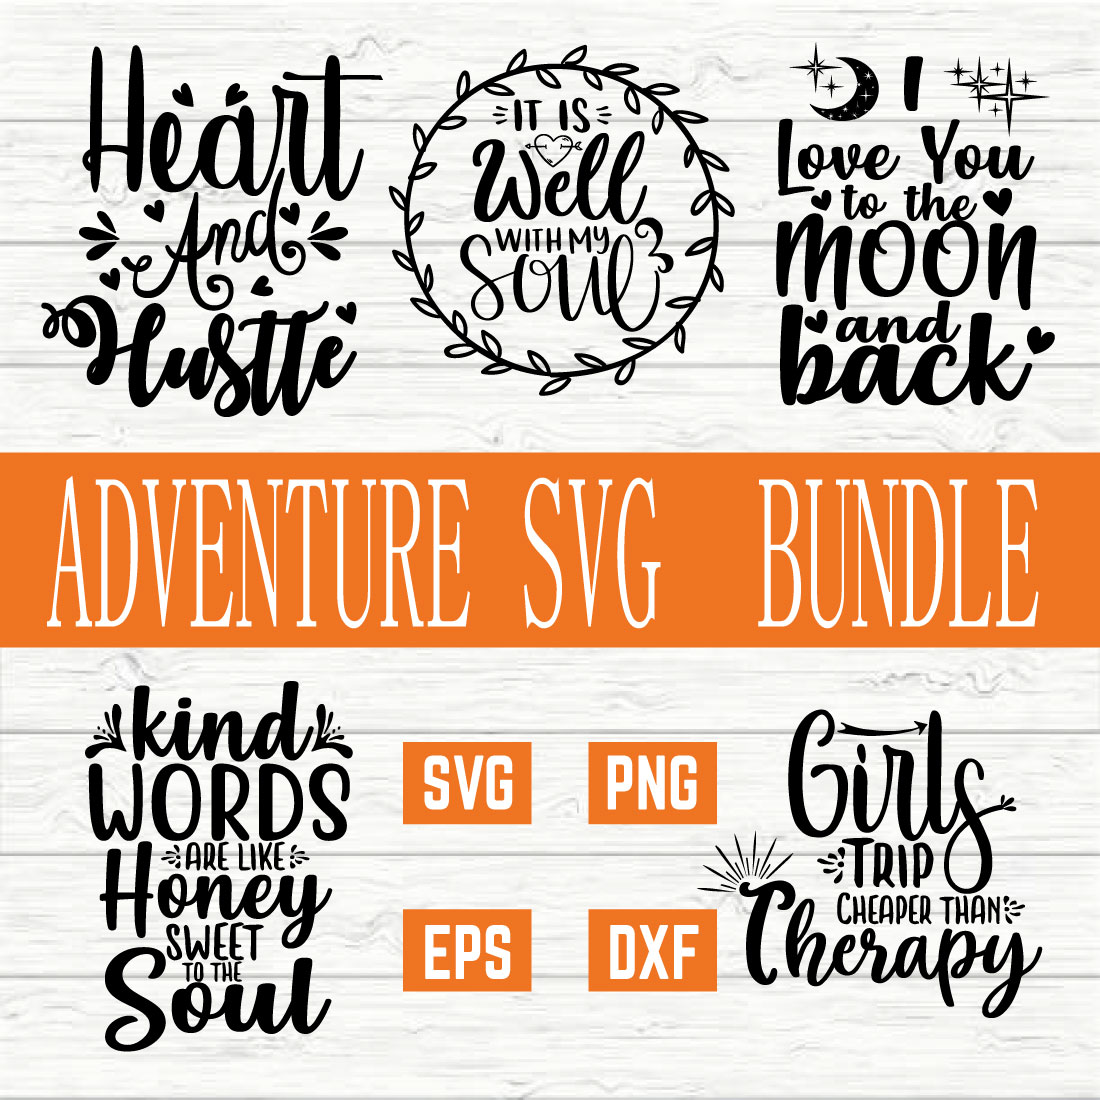 Adventure Typography Bundle vol 3 cover image.